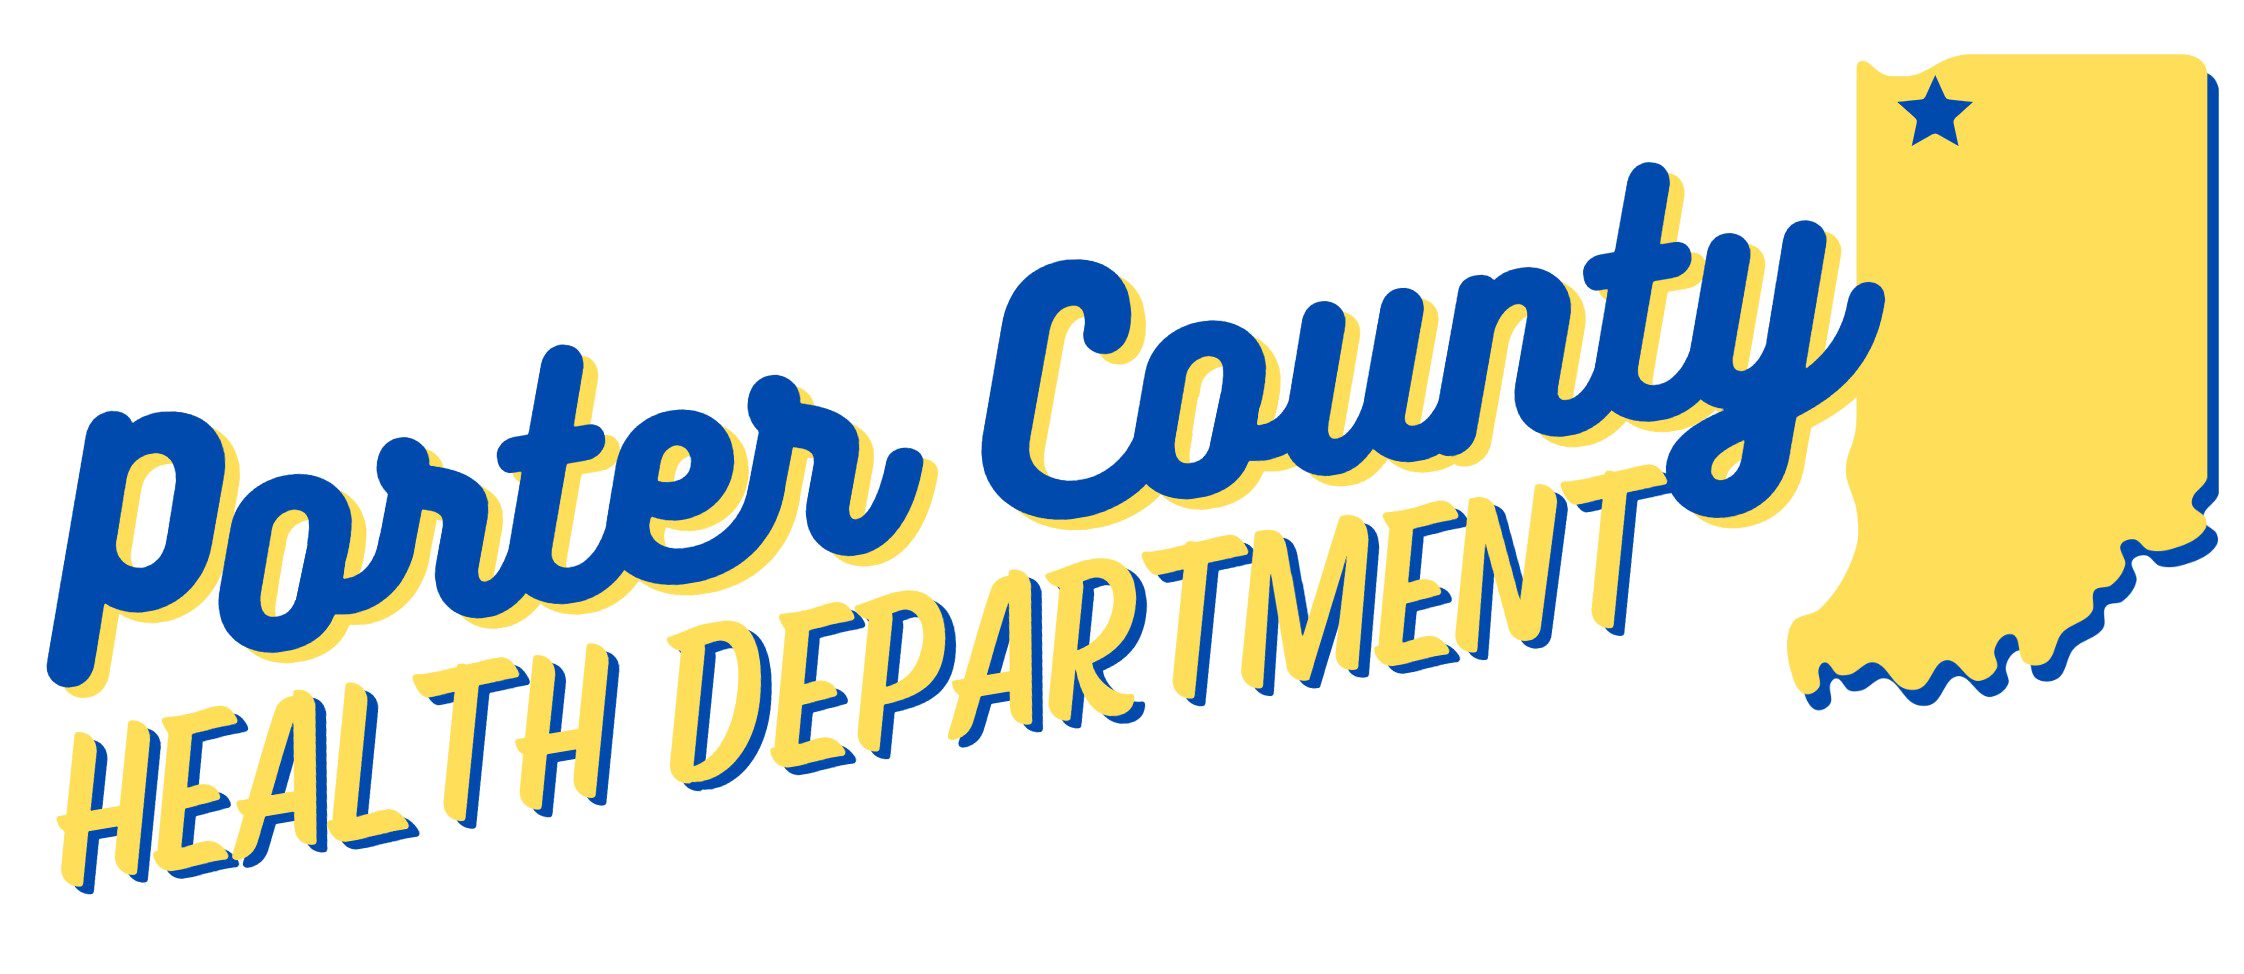 Porter County logo